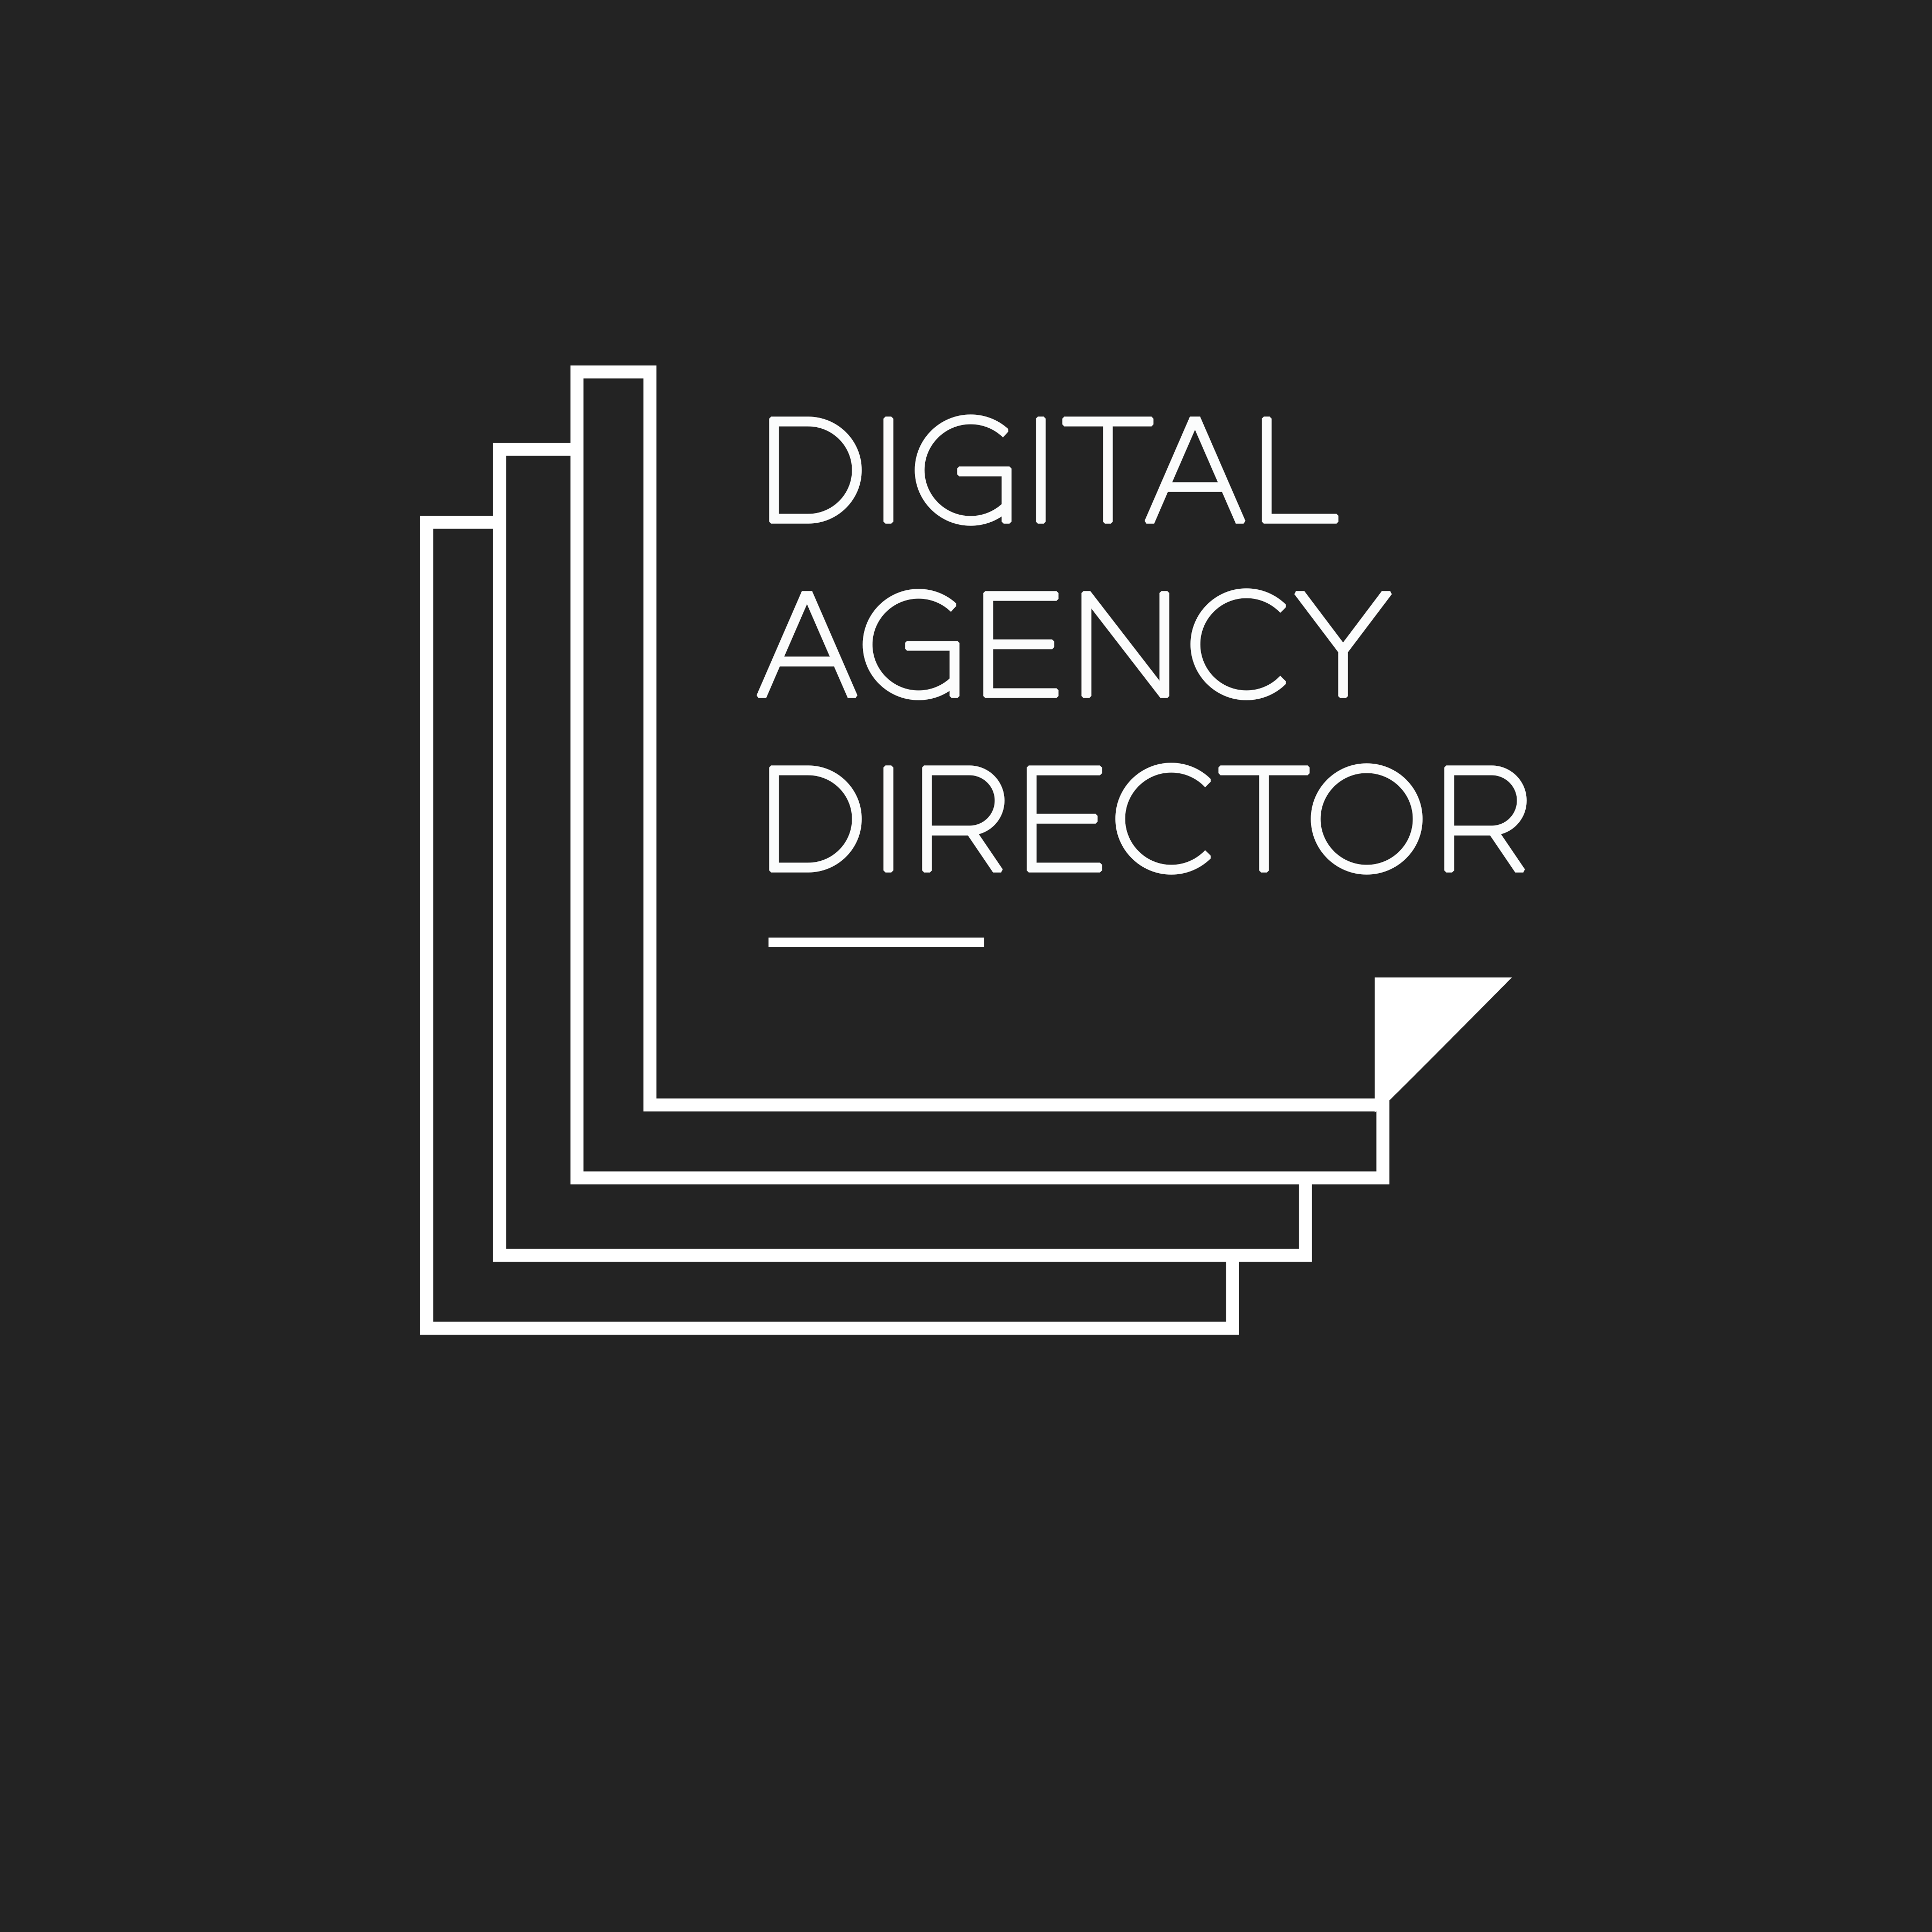 Digital Agency Director